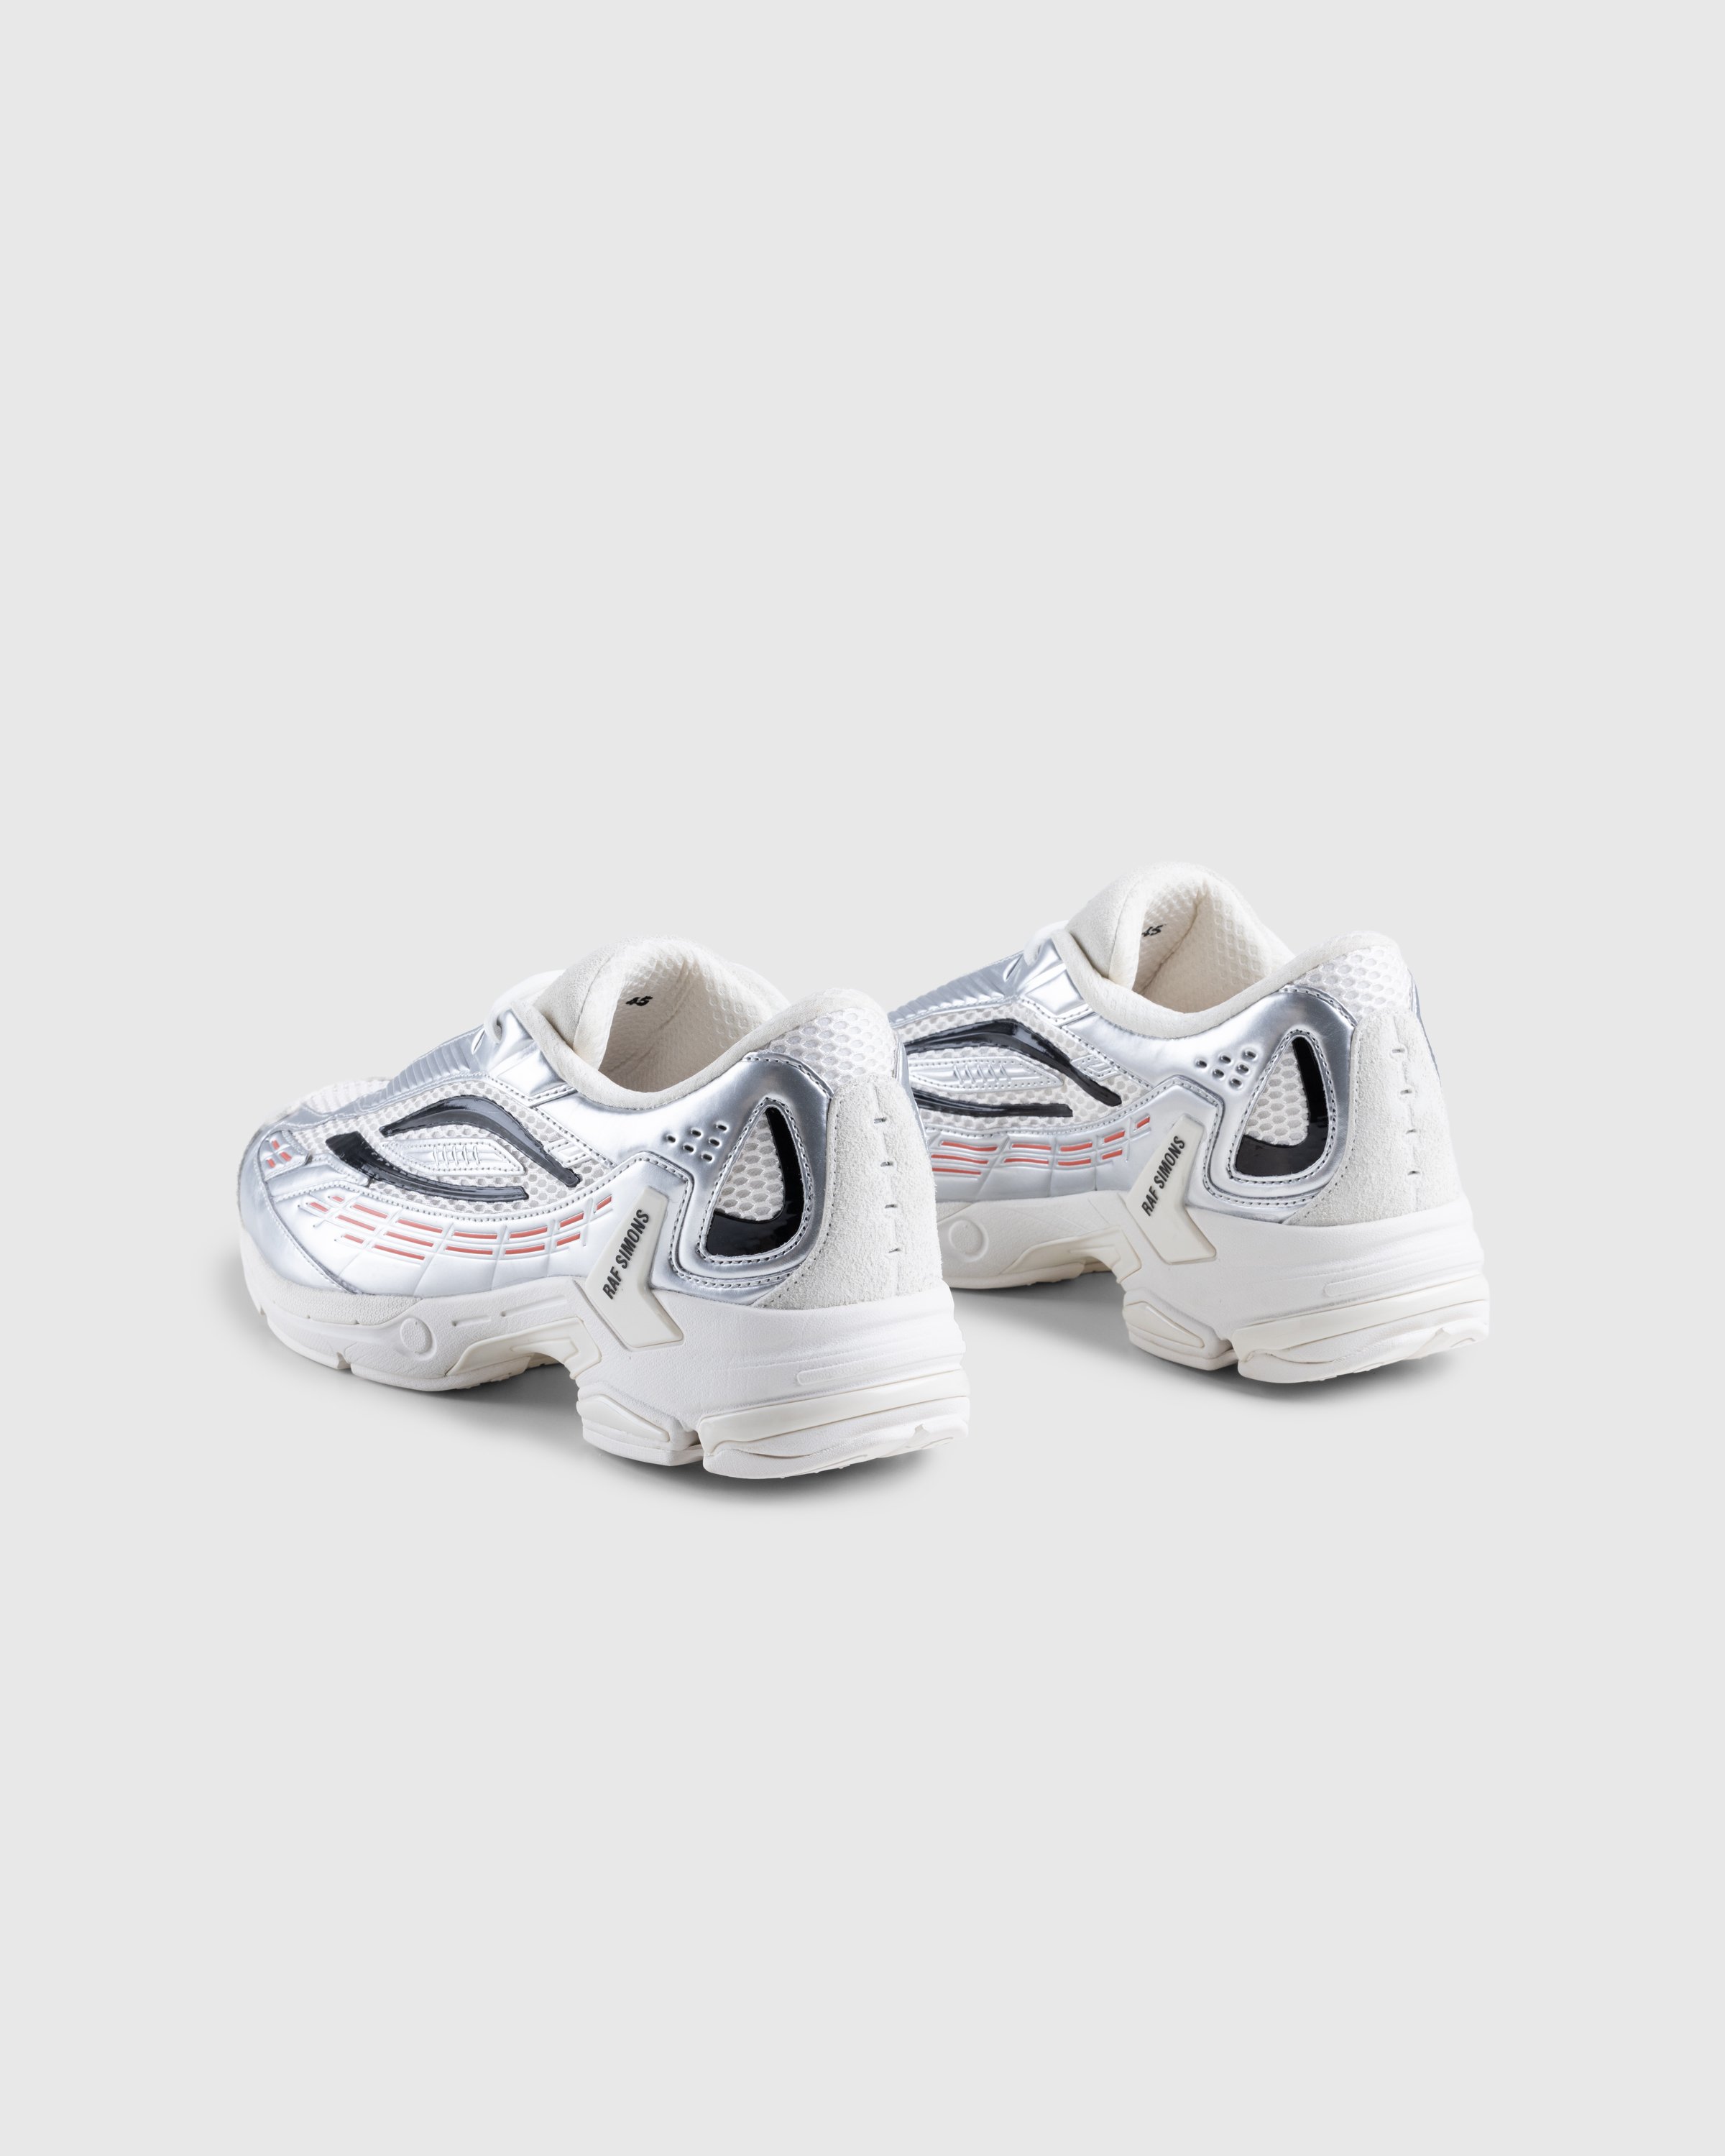 Raf Simons - ULTRASCEPTRE 3589 - Footwear - White - Image 4